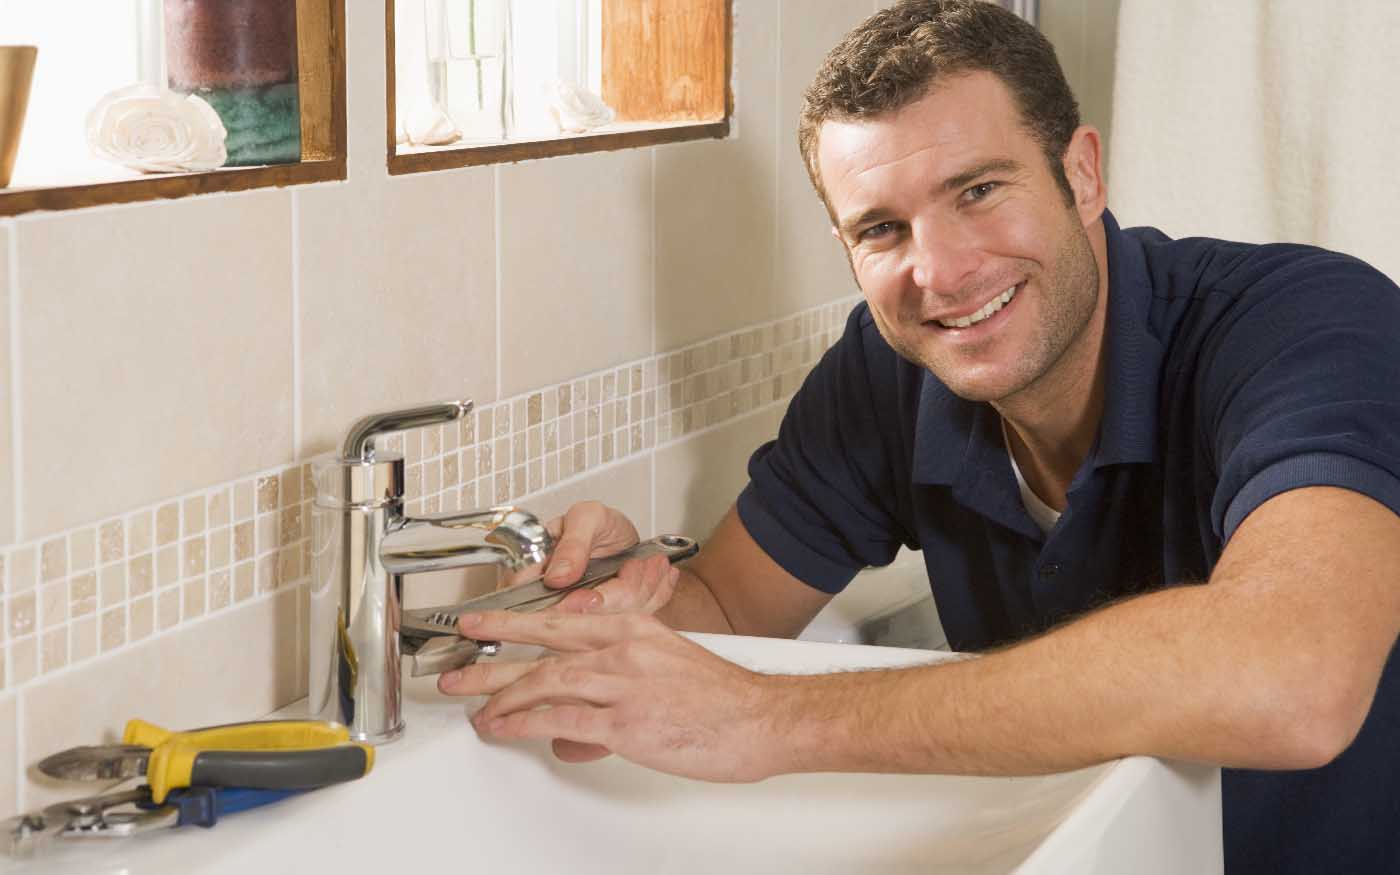 Handyman Plumber Replacing Faucet